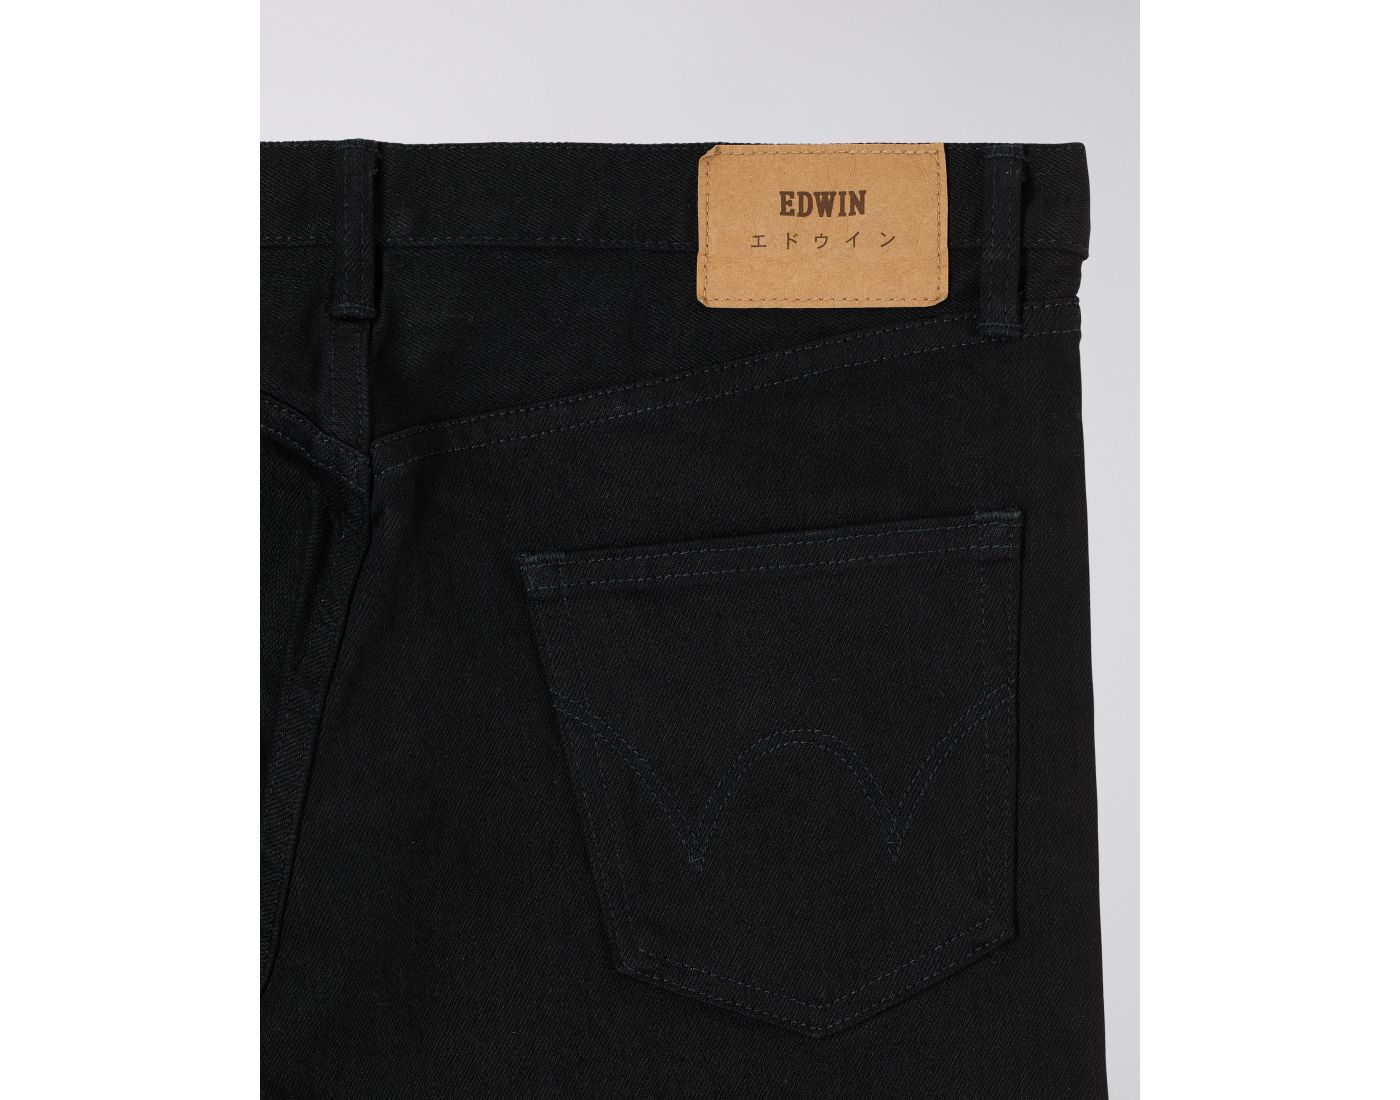 EDWIN Slim Tapered Jeans - Black - Rinsed | EDWIN Europe